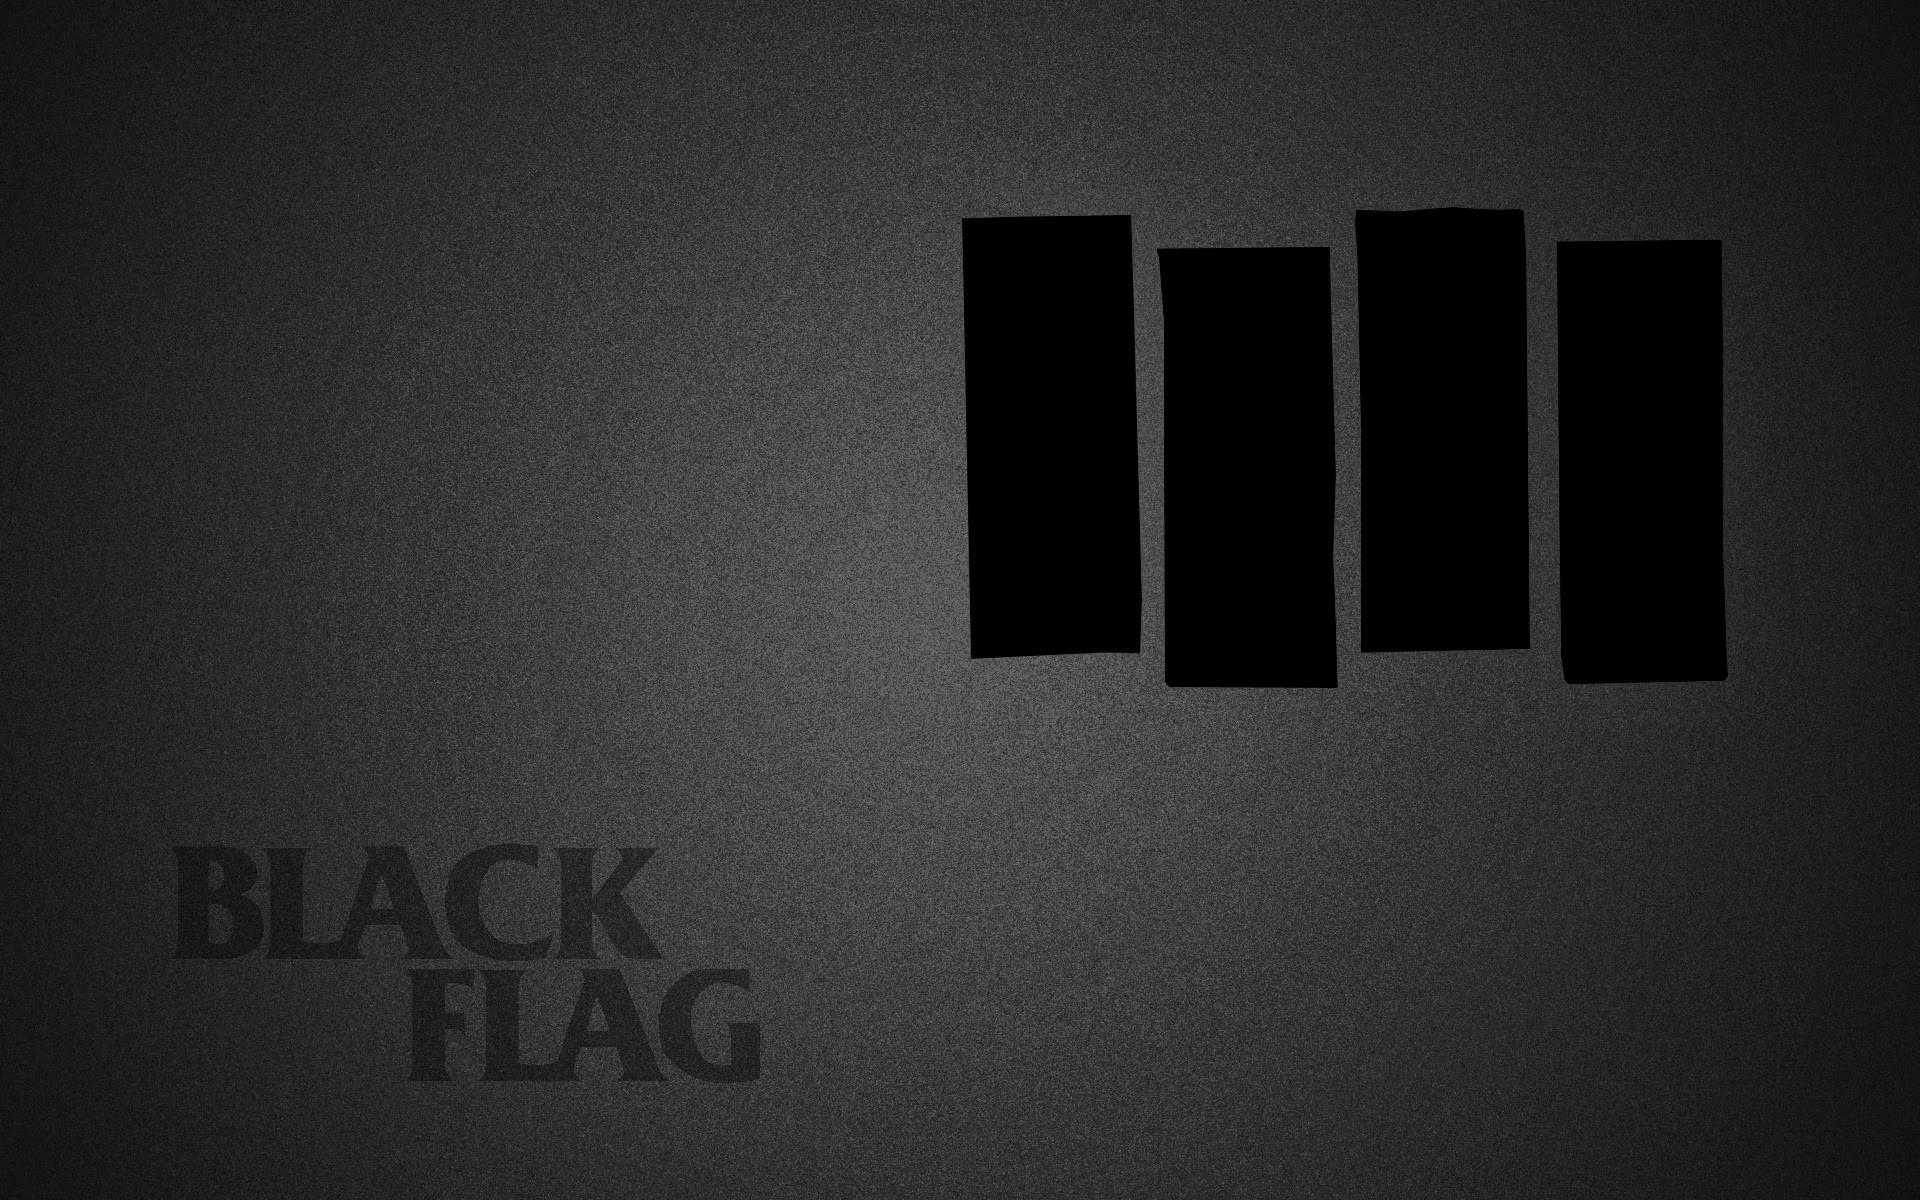 General 1920x1200 music monochrome dark Black Flag (band)